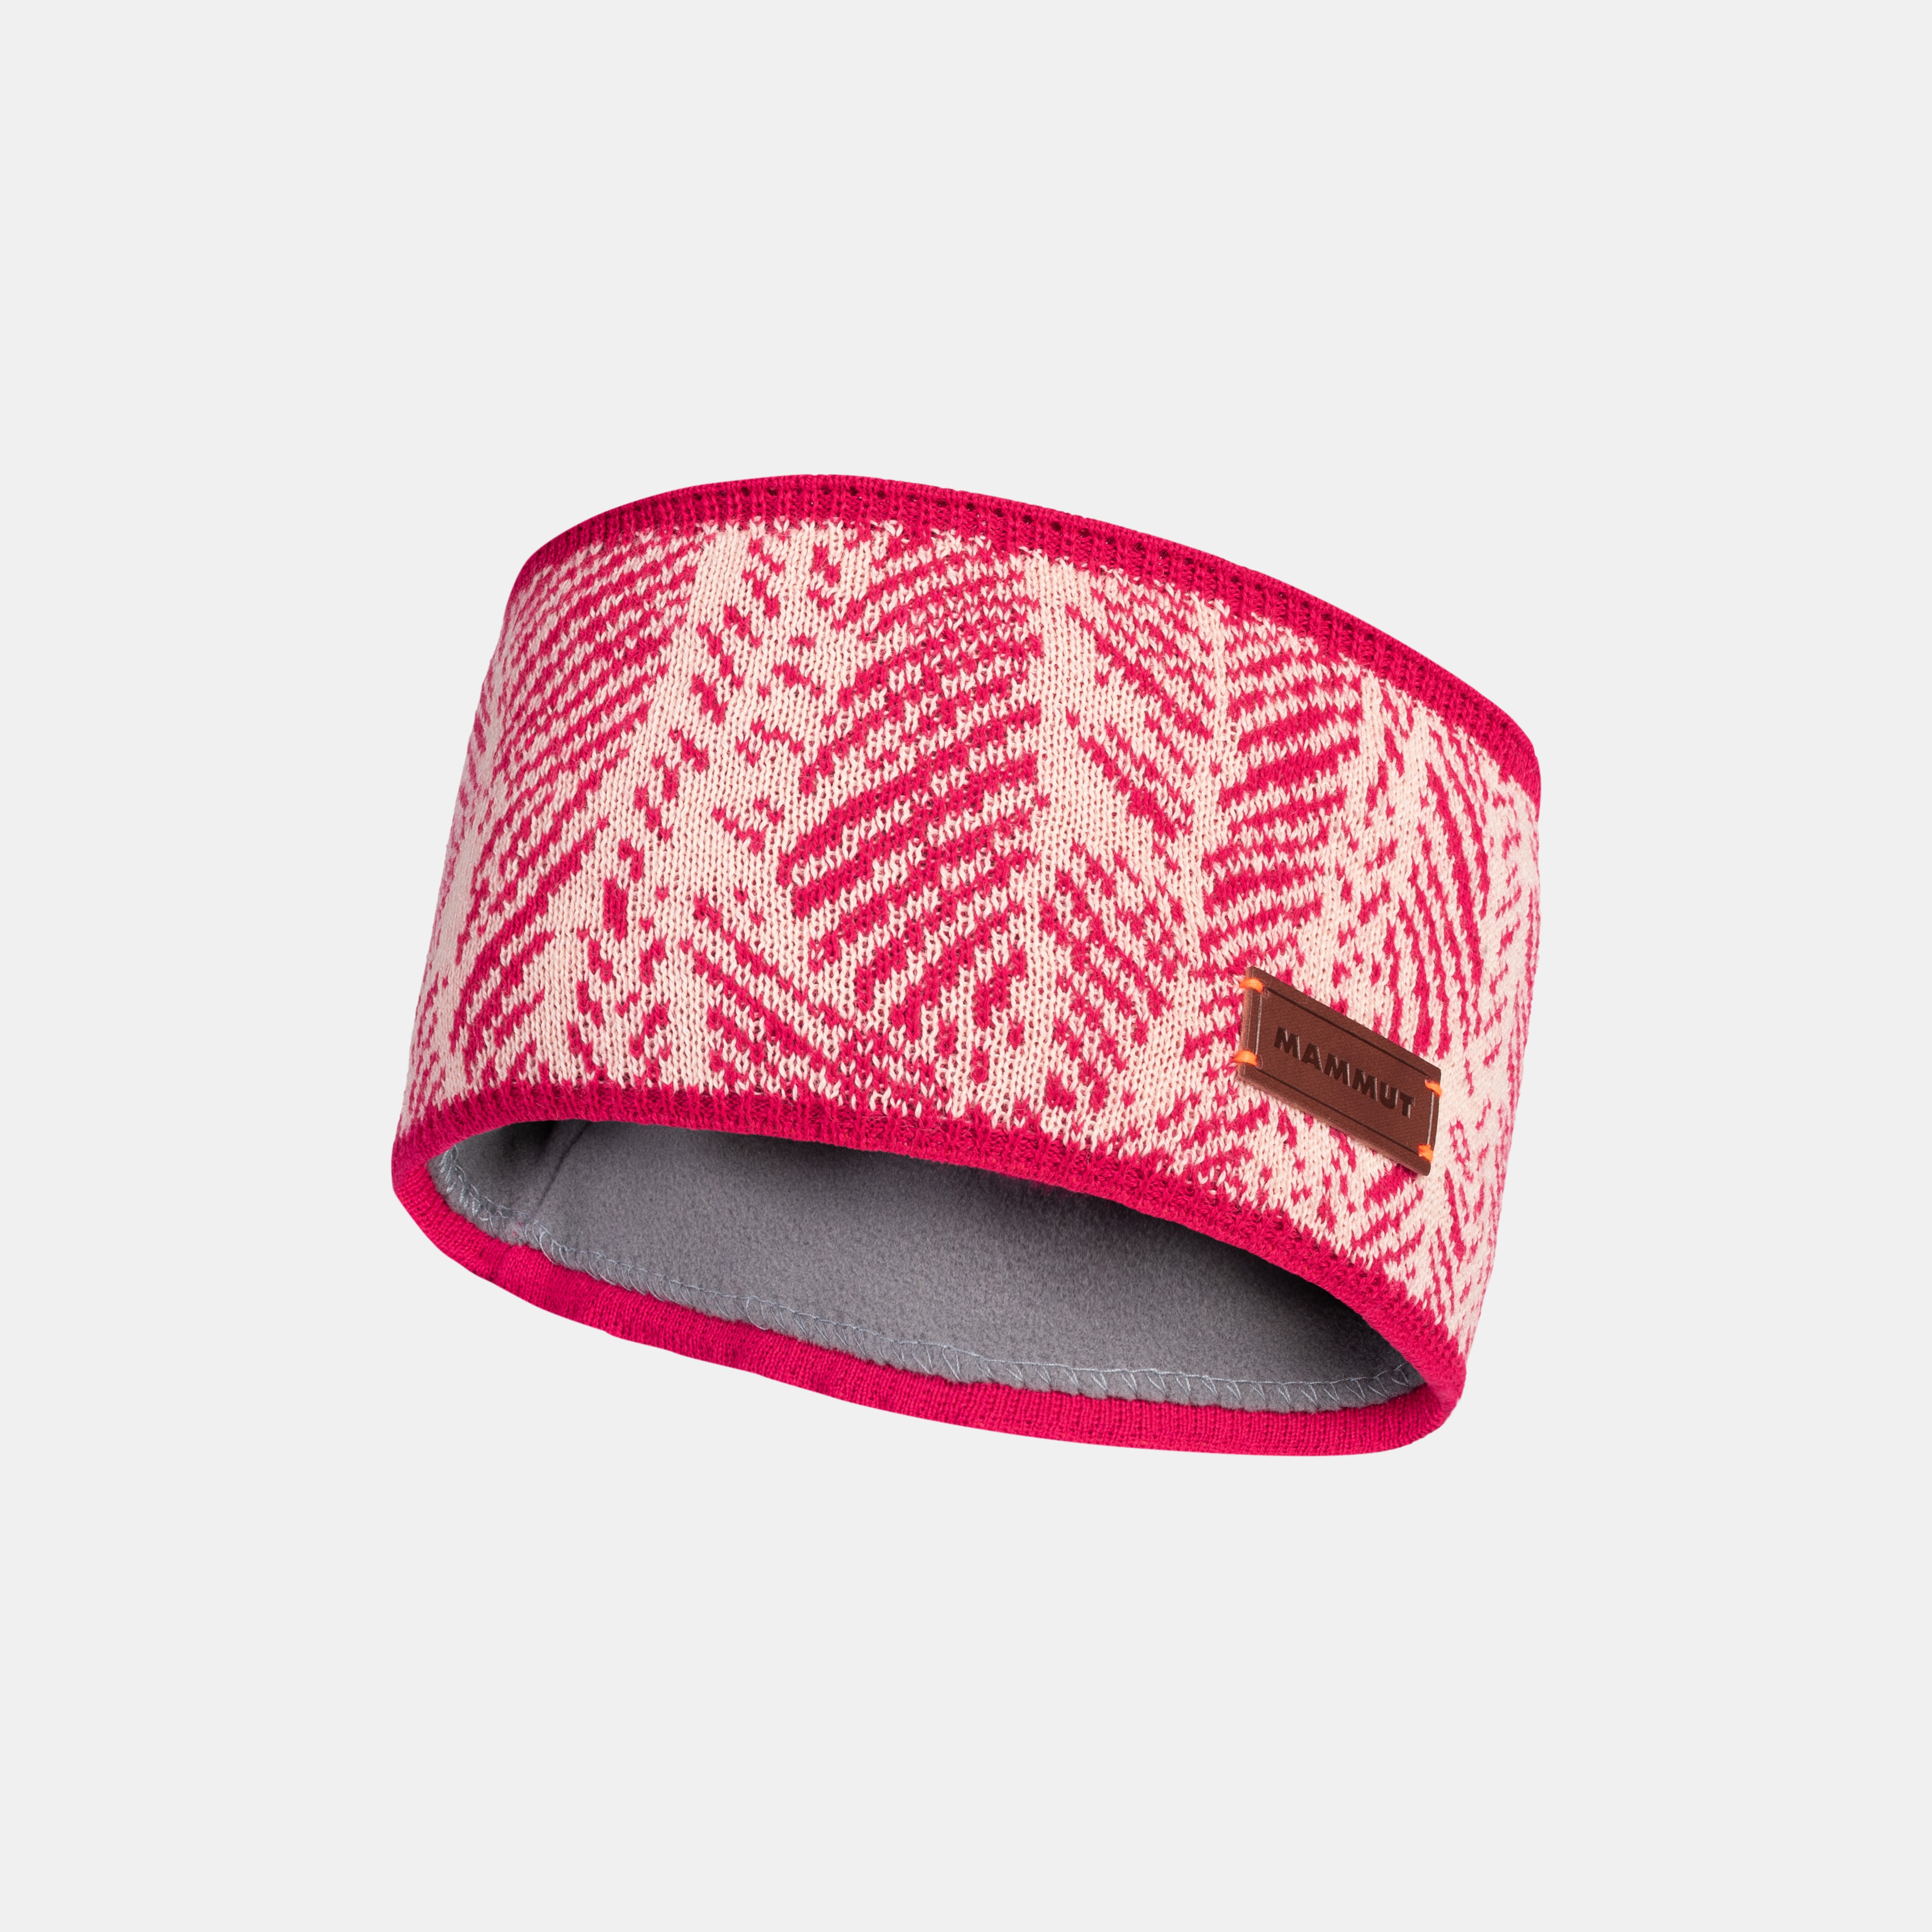 Snow Headband product image